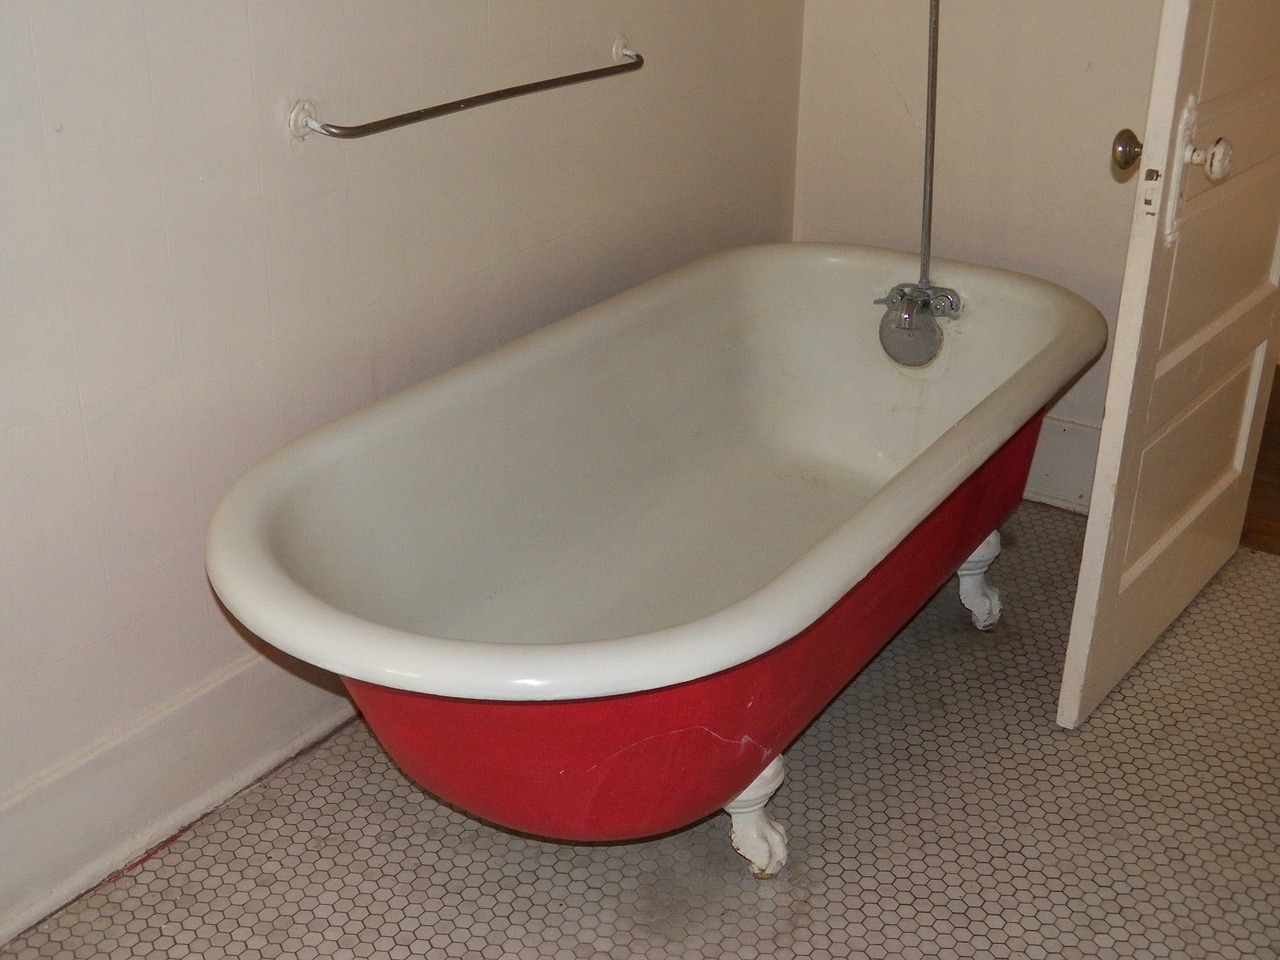 Repair A Peeling Bath Tub